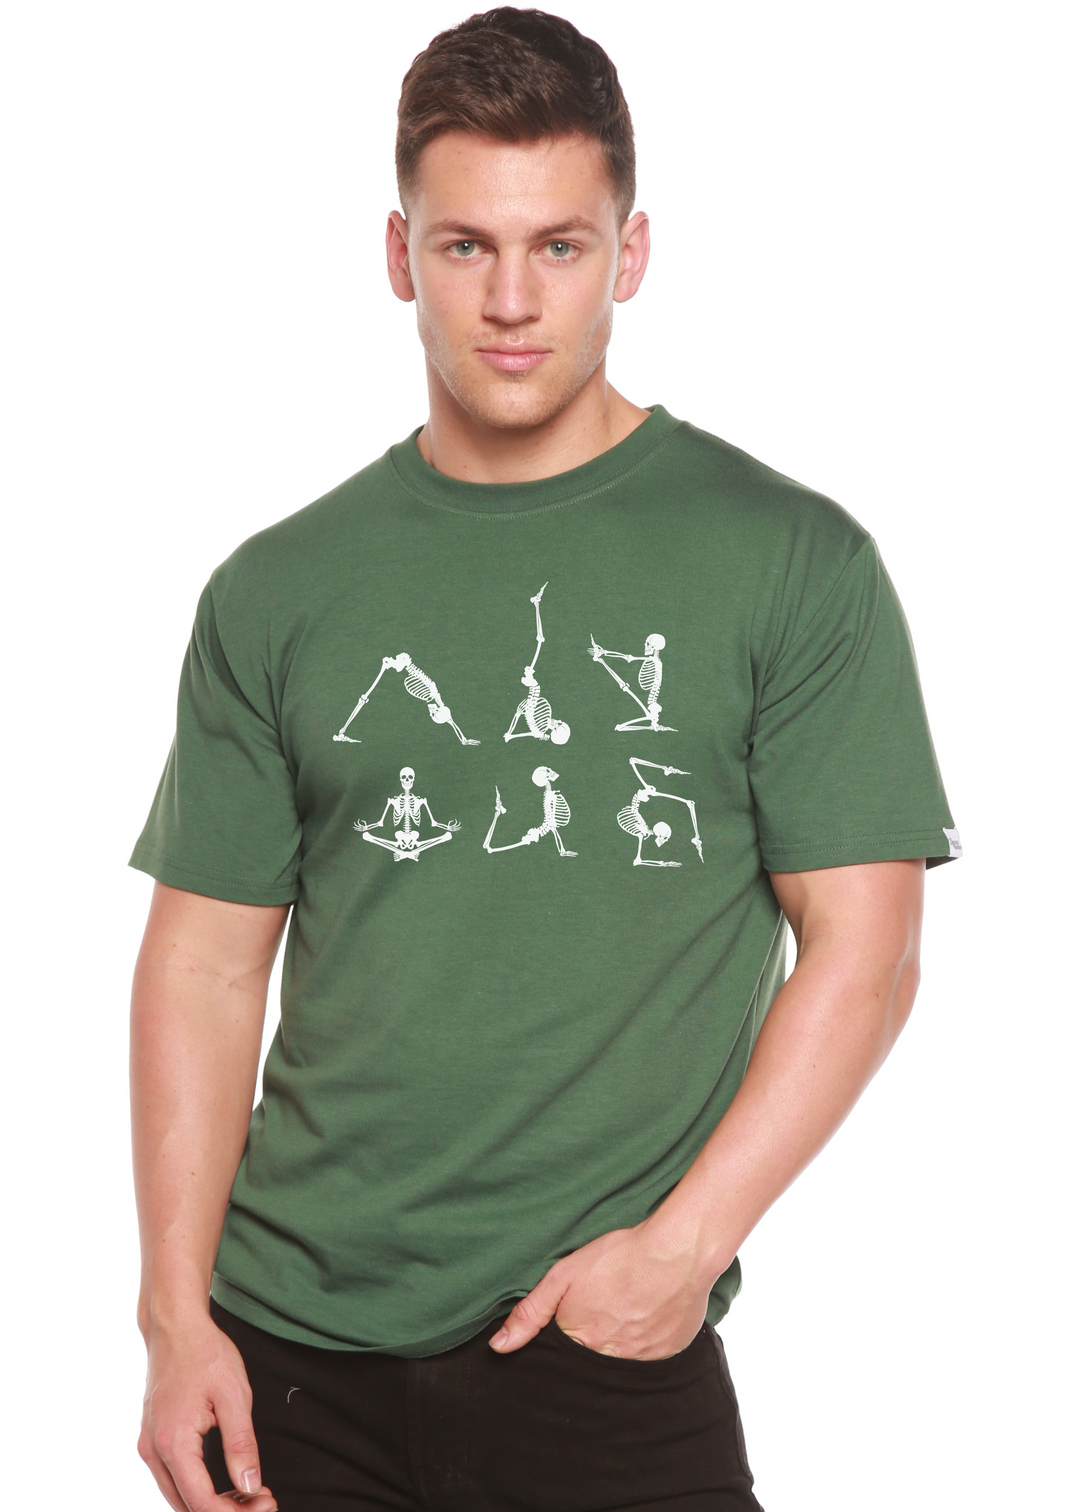 Halloween Skeleton Namaste Men's Bamboo Viscose/Organic Cotton Short Sleeve Graphic T-Shirt